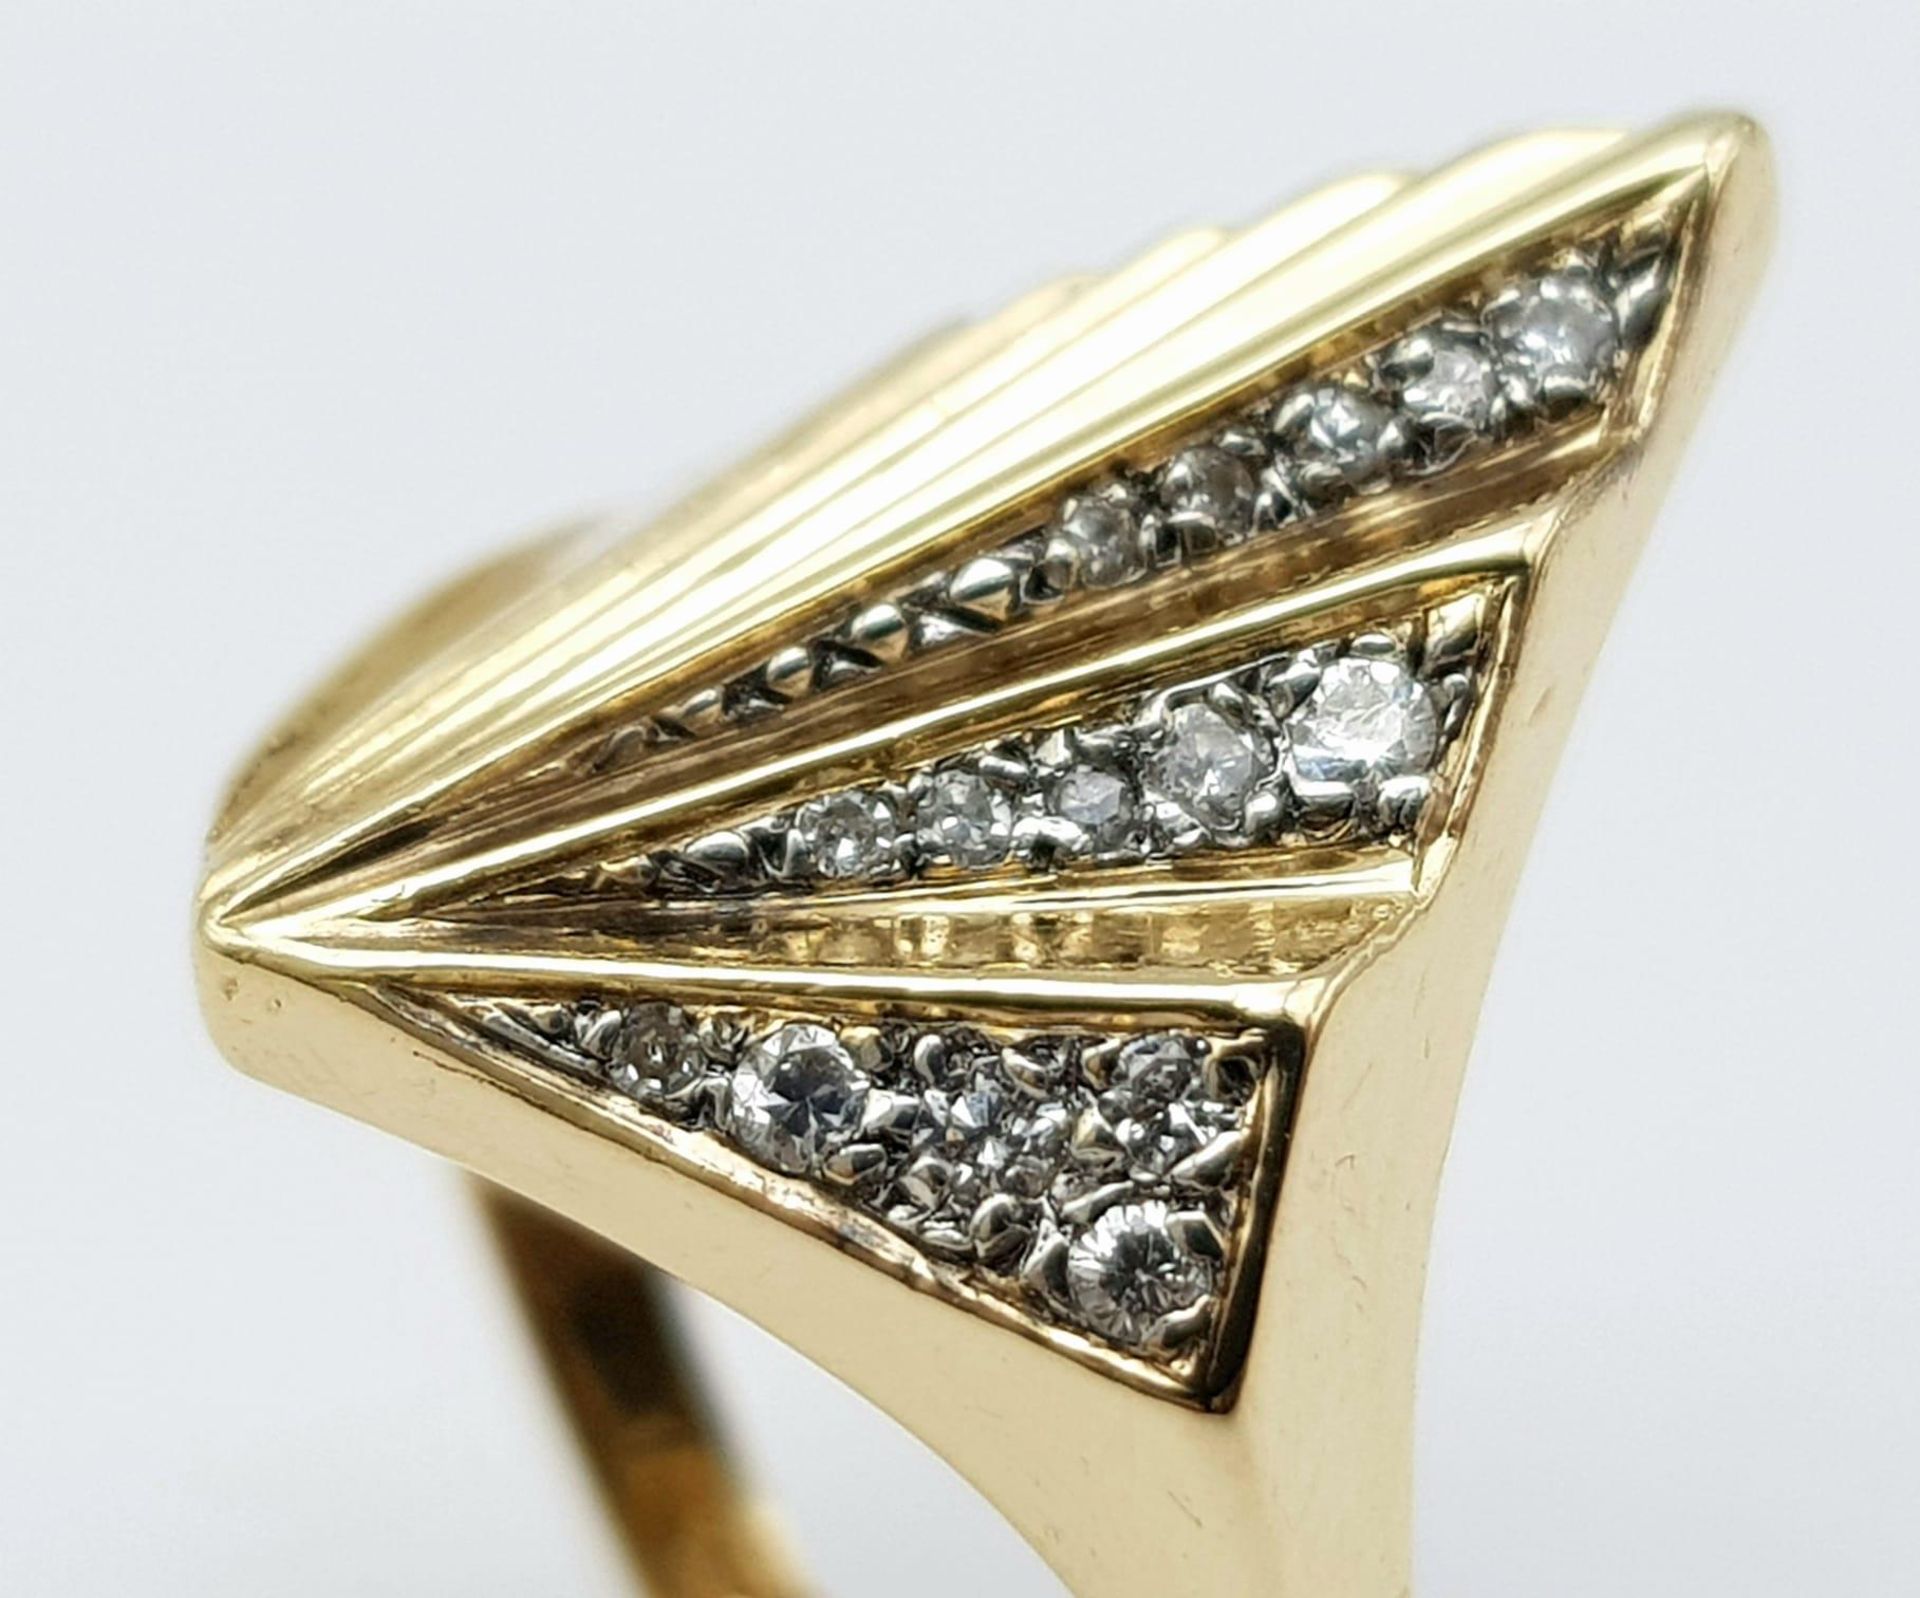 A 14K YELLOW GOLD ART DECO STYLE DIAMOND SET RING. 4.1G. SIZE M. - Image 4 of 6